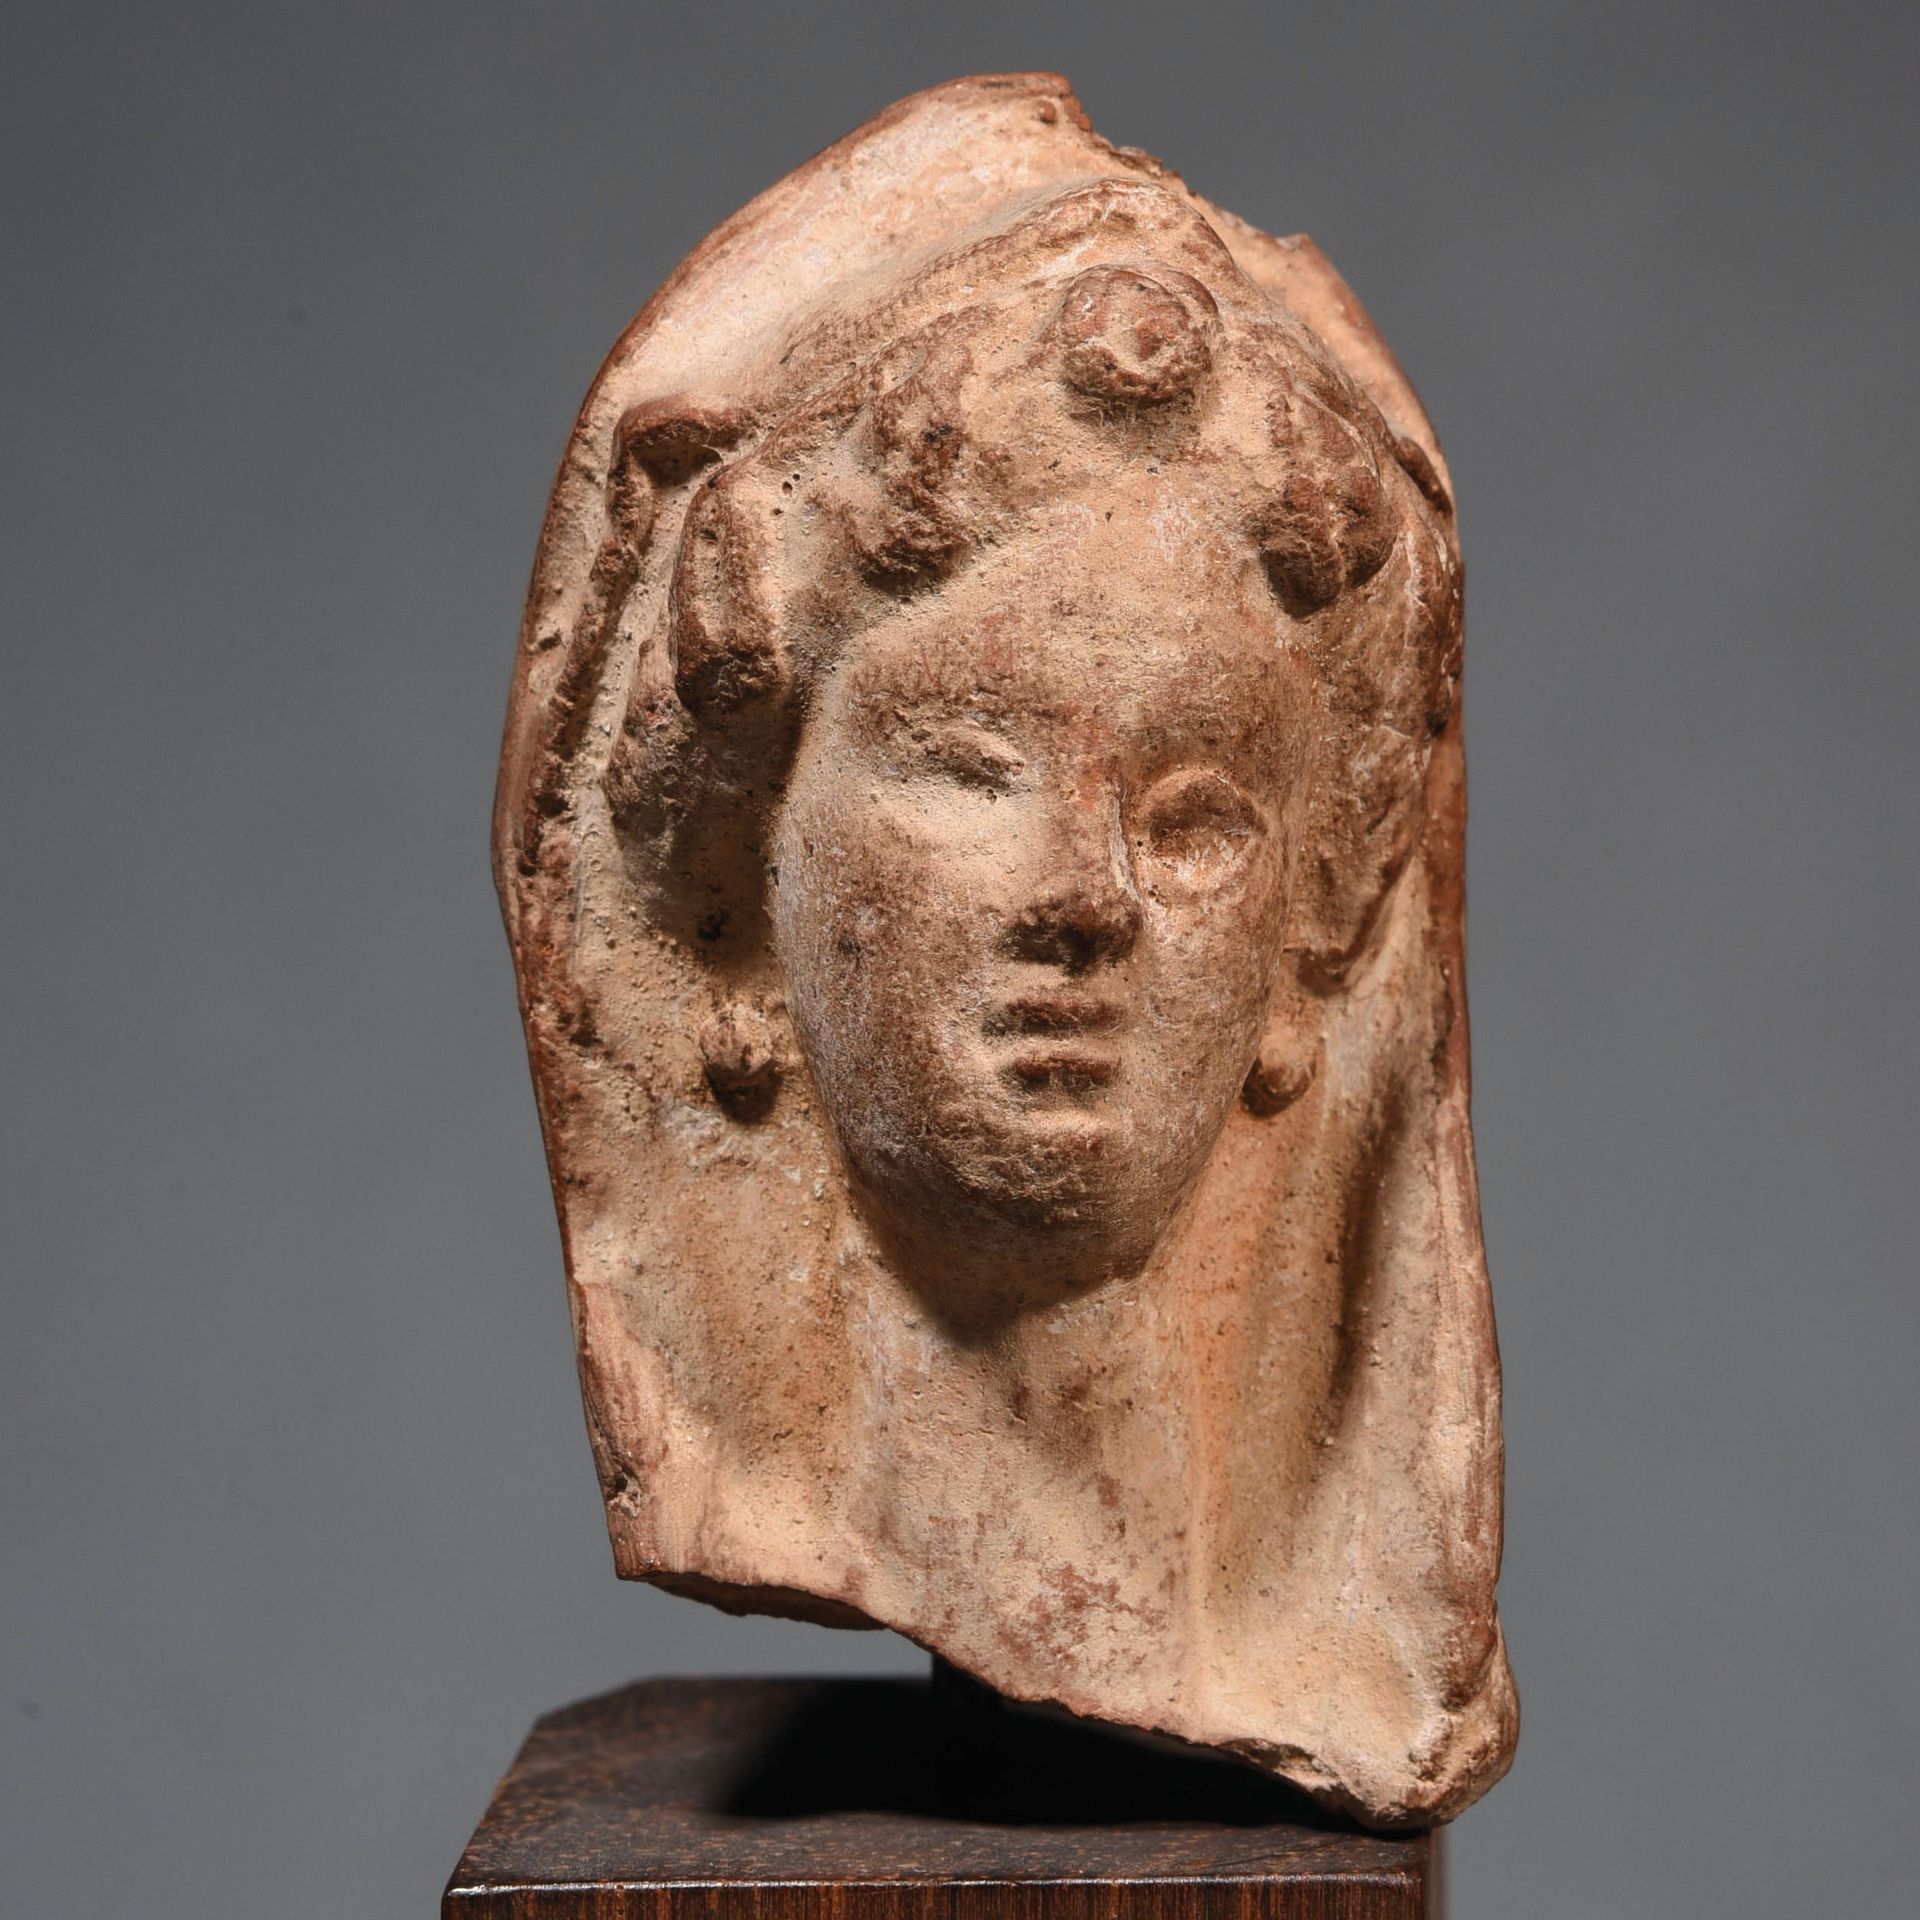 Null 一套2个前摄象头

希腊化的艺术

在陶土中



出处

前L先生的收藏，1980年代。



一批2个希腊时代的陶俑头像。